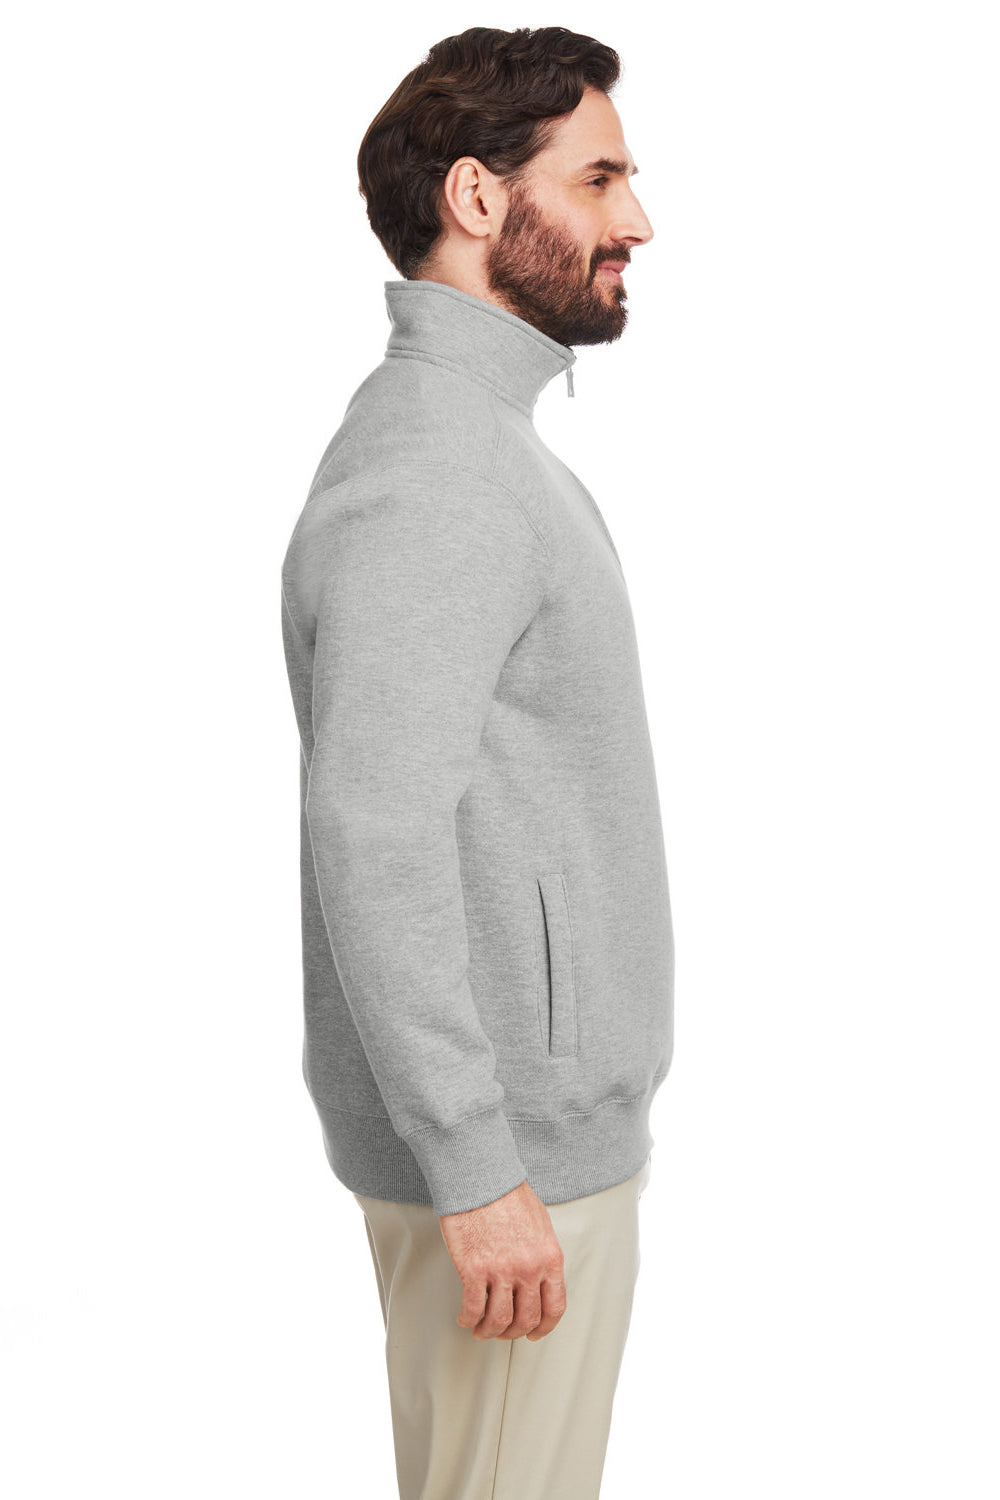 Nautica N17176 Mens Anchor 1/4 Zip Sweatshirt Oxford Grey Side